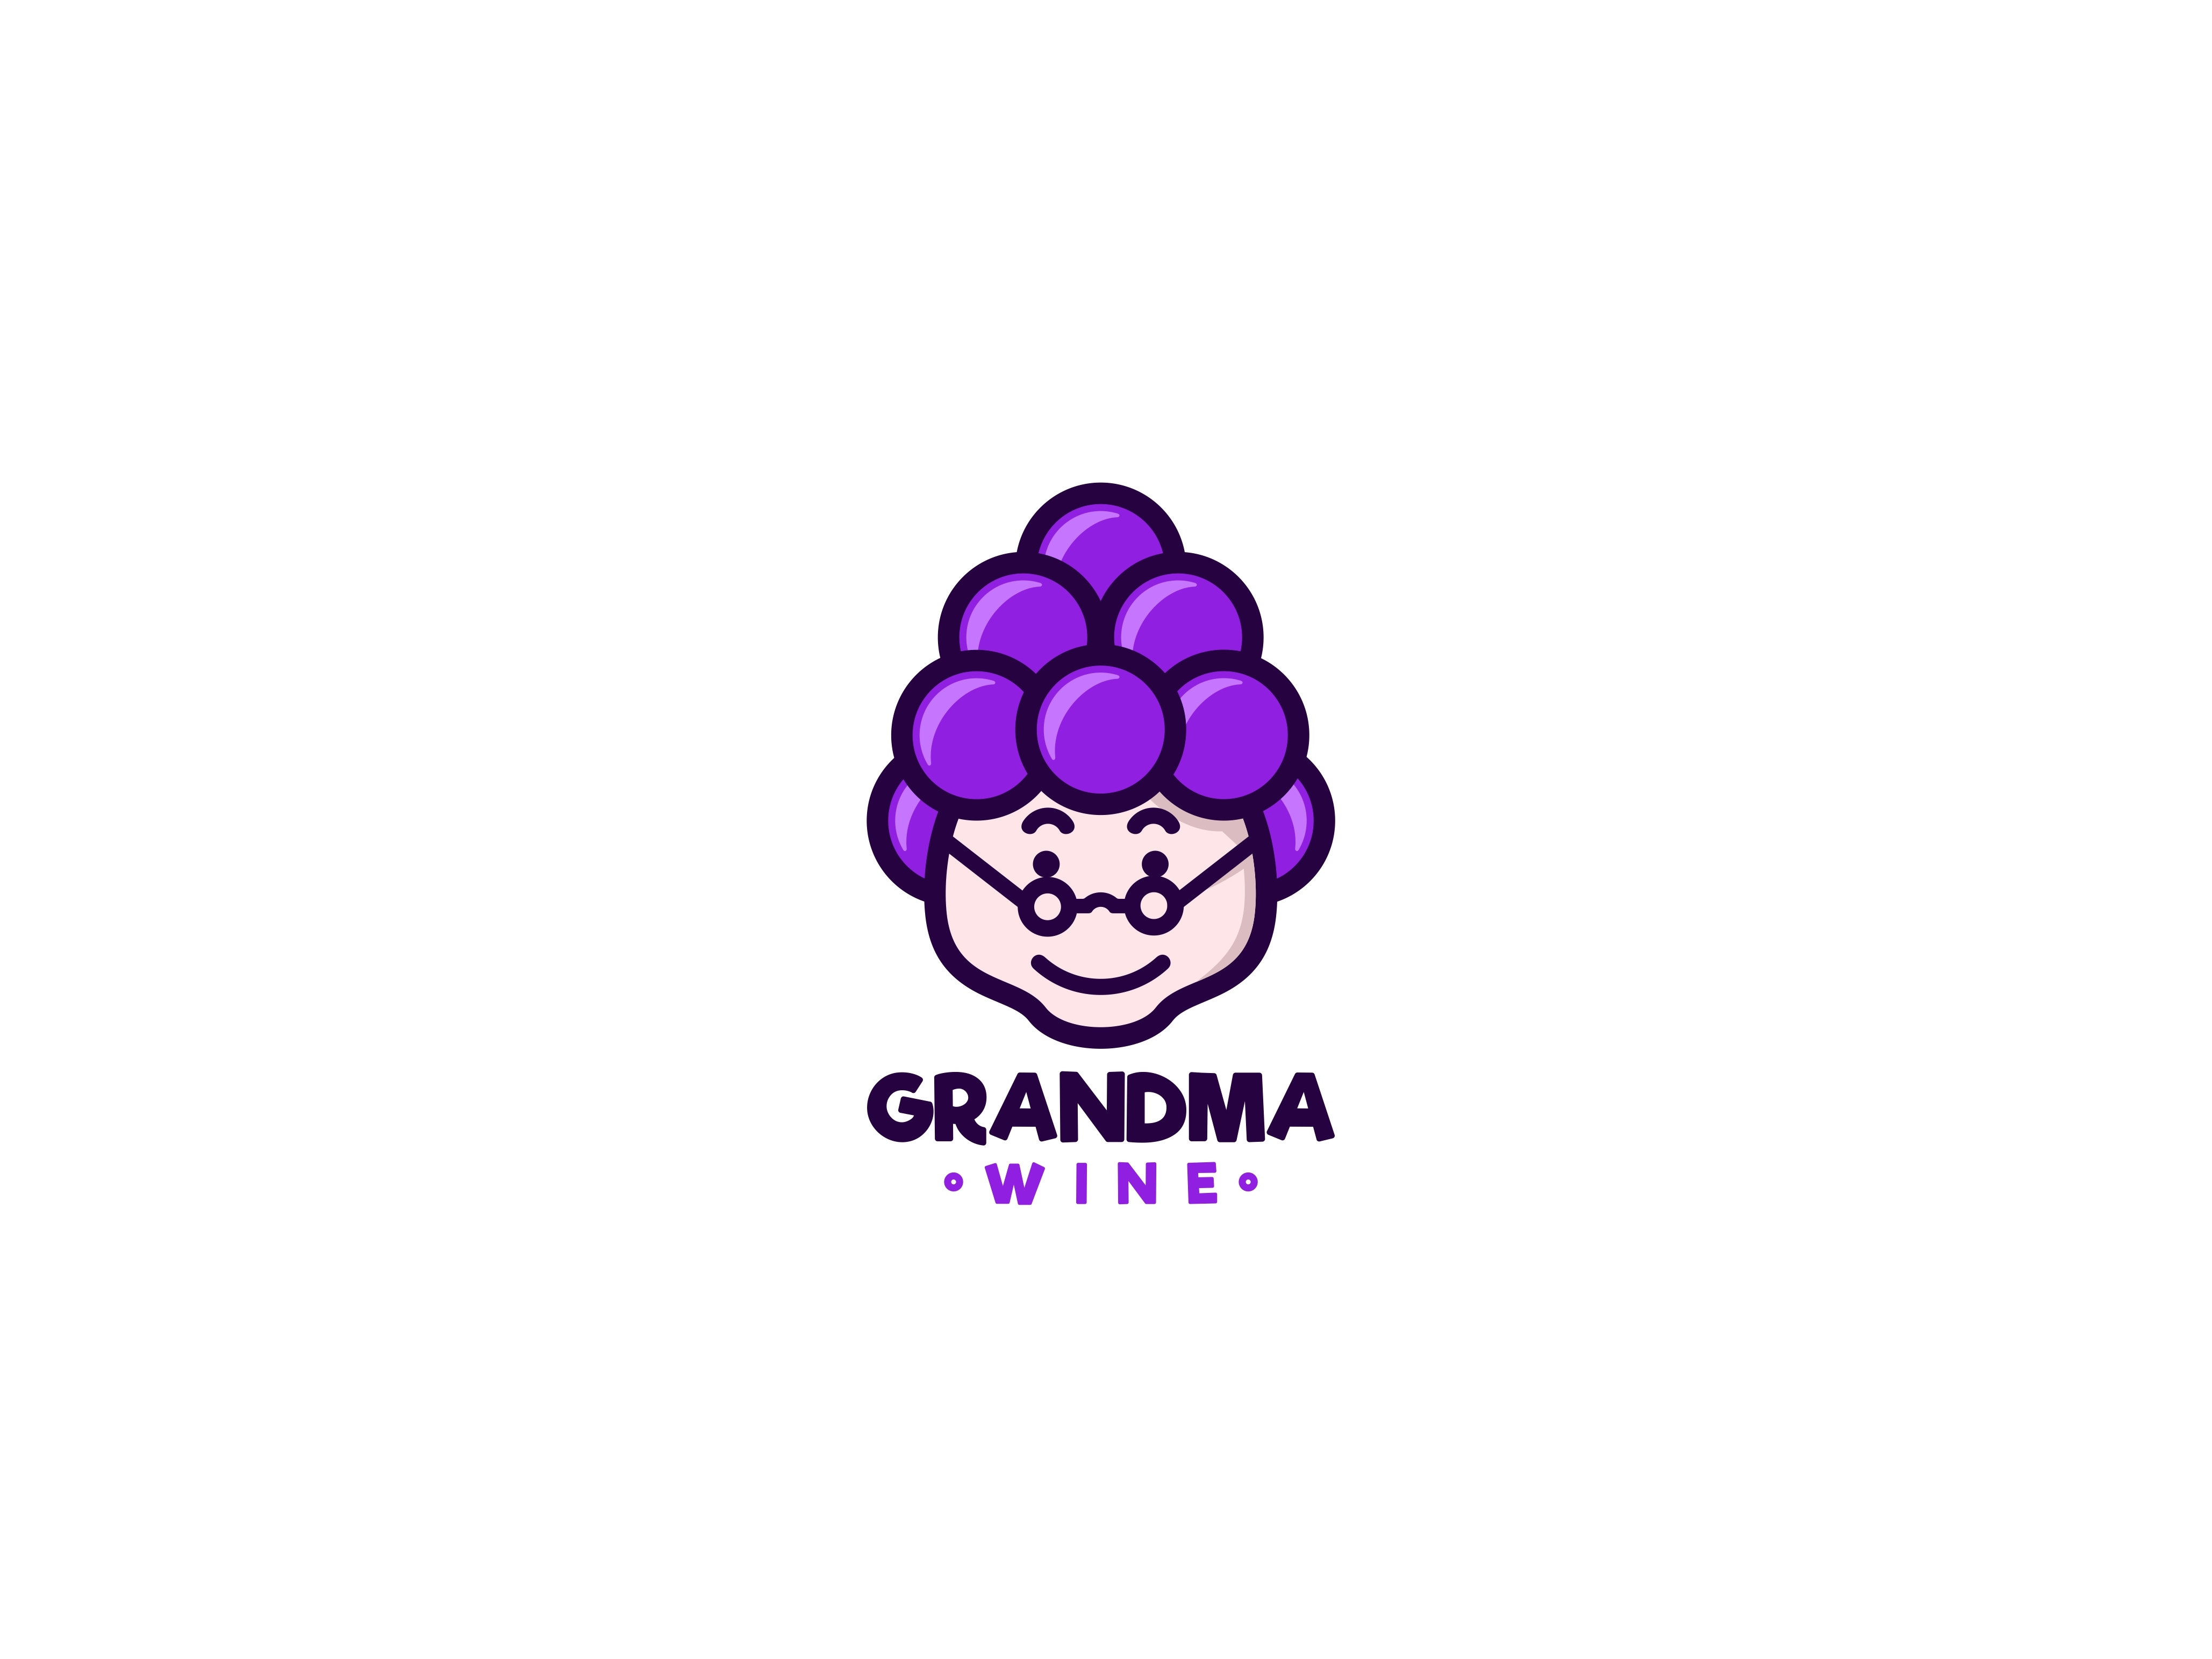 Download Grandma Wine by Taufik Rizky A | taufikrizkyy on Dribbble